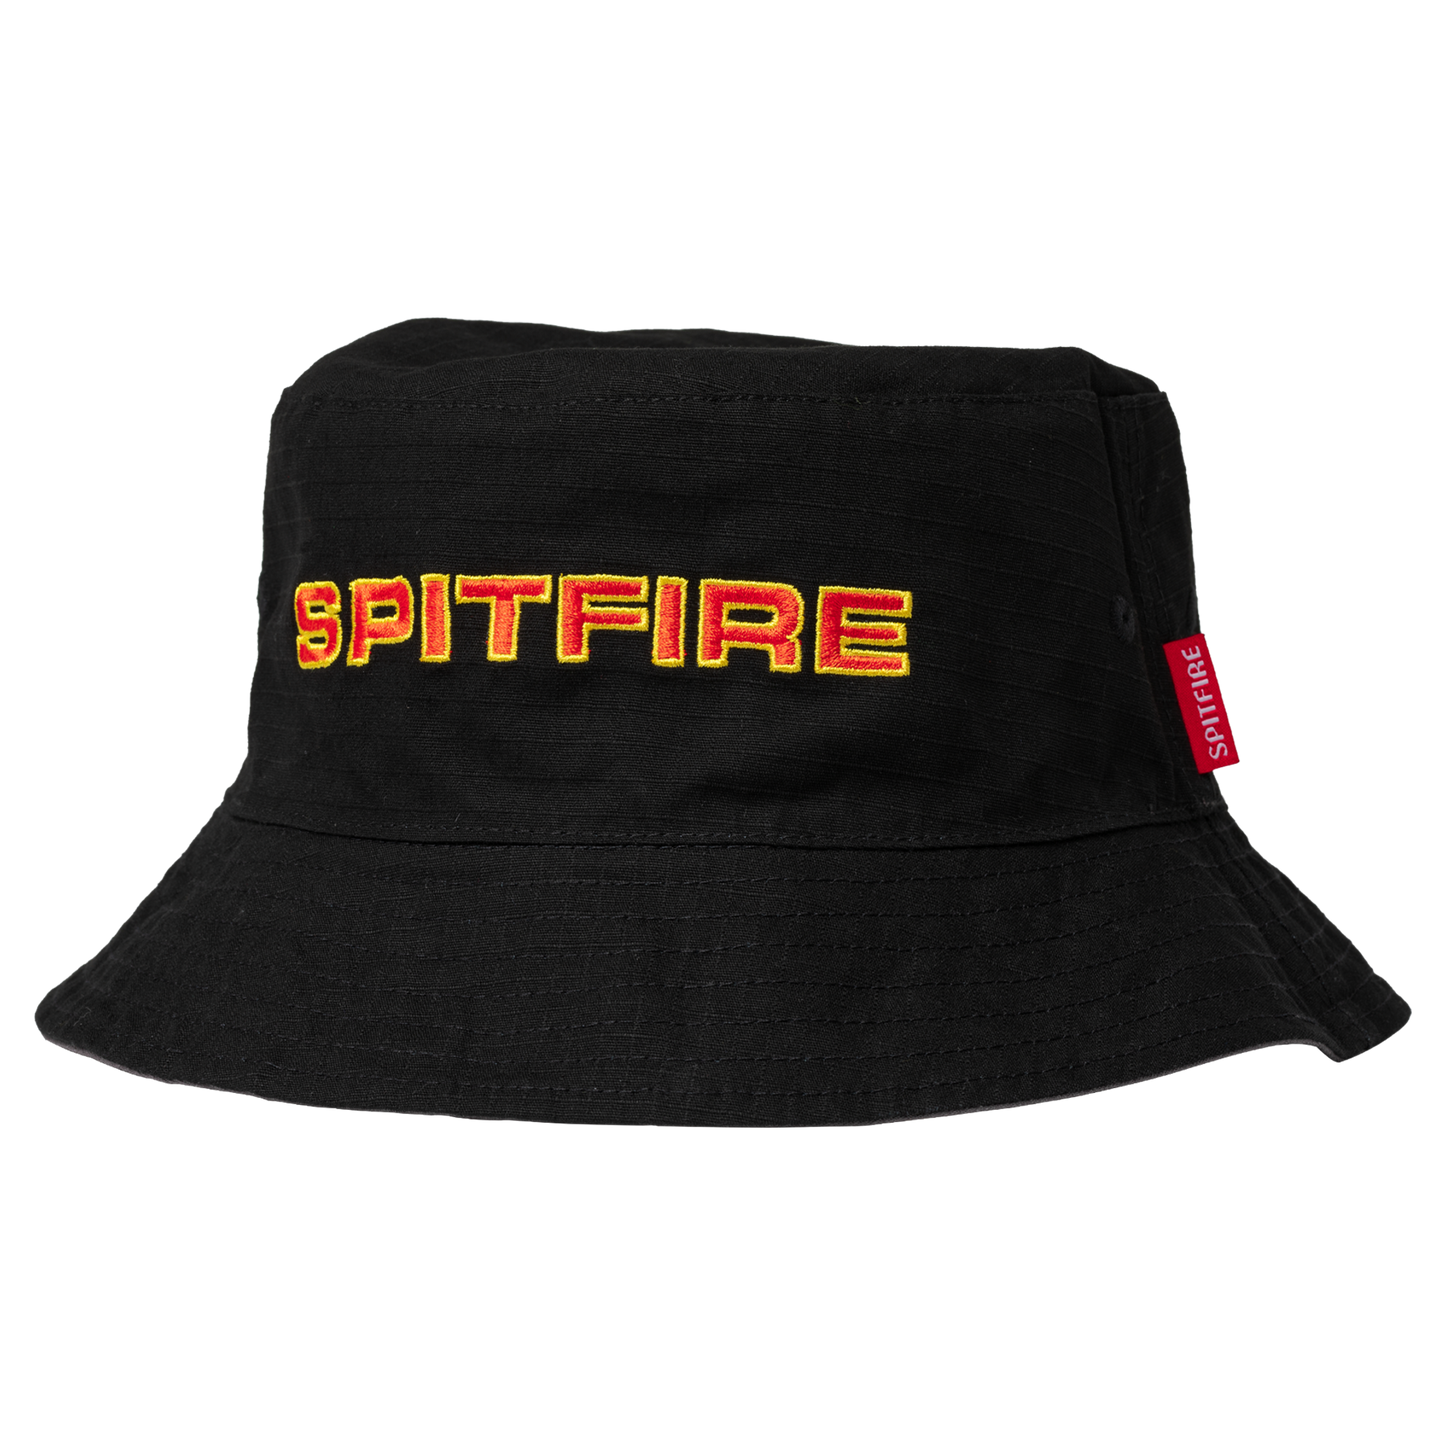 Spitfire Classic '87 Reversible Bucket Hat